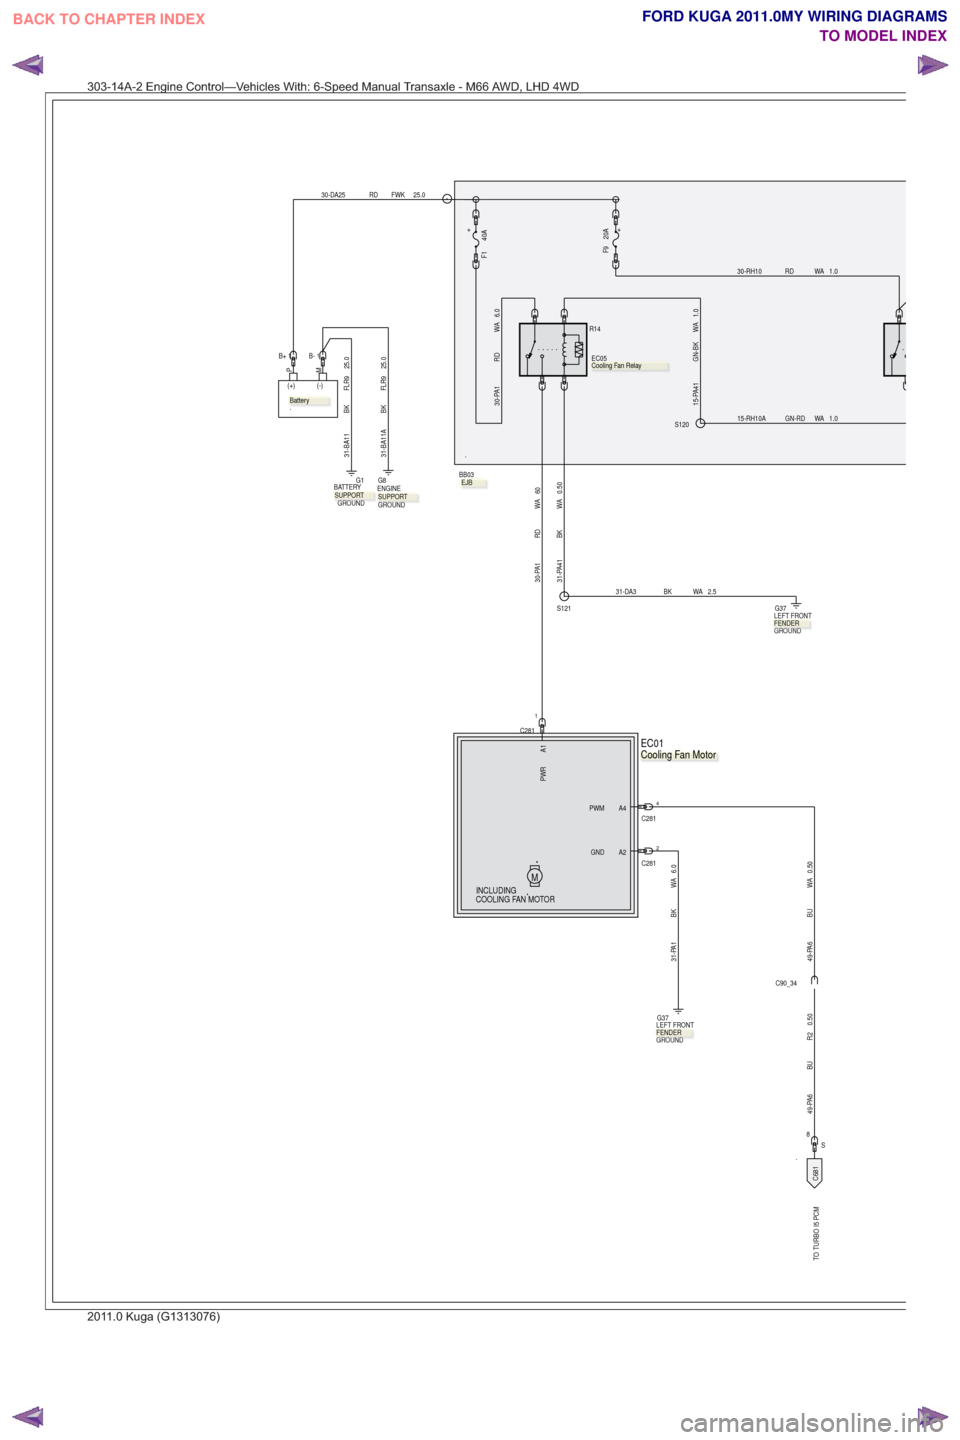 FORD KUGA 2011 1.G Wiring Diagram Workshop Manual .
TO TURBO I5 PCM
6.0
WA
BK
31-PA1
C281
4
0.50
WA
BU
49-PA6
A4
PWM
A2
GND
PWR A1
INCLUDING
COOLING FAN MOTORM
EC01.
25.0
FWK
RD
30-DA25
PM
(+) (-)
.
B+11B-
GROUND
ENGINE
G8
G1
BATTERY
GROUND
25.0
FLR9